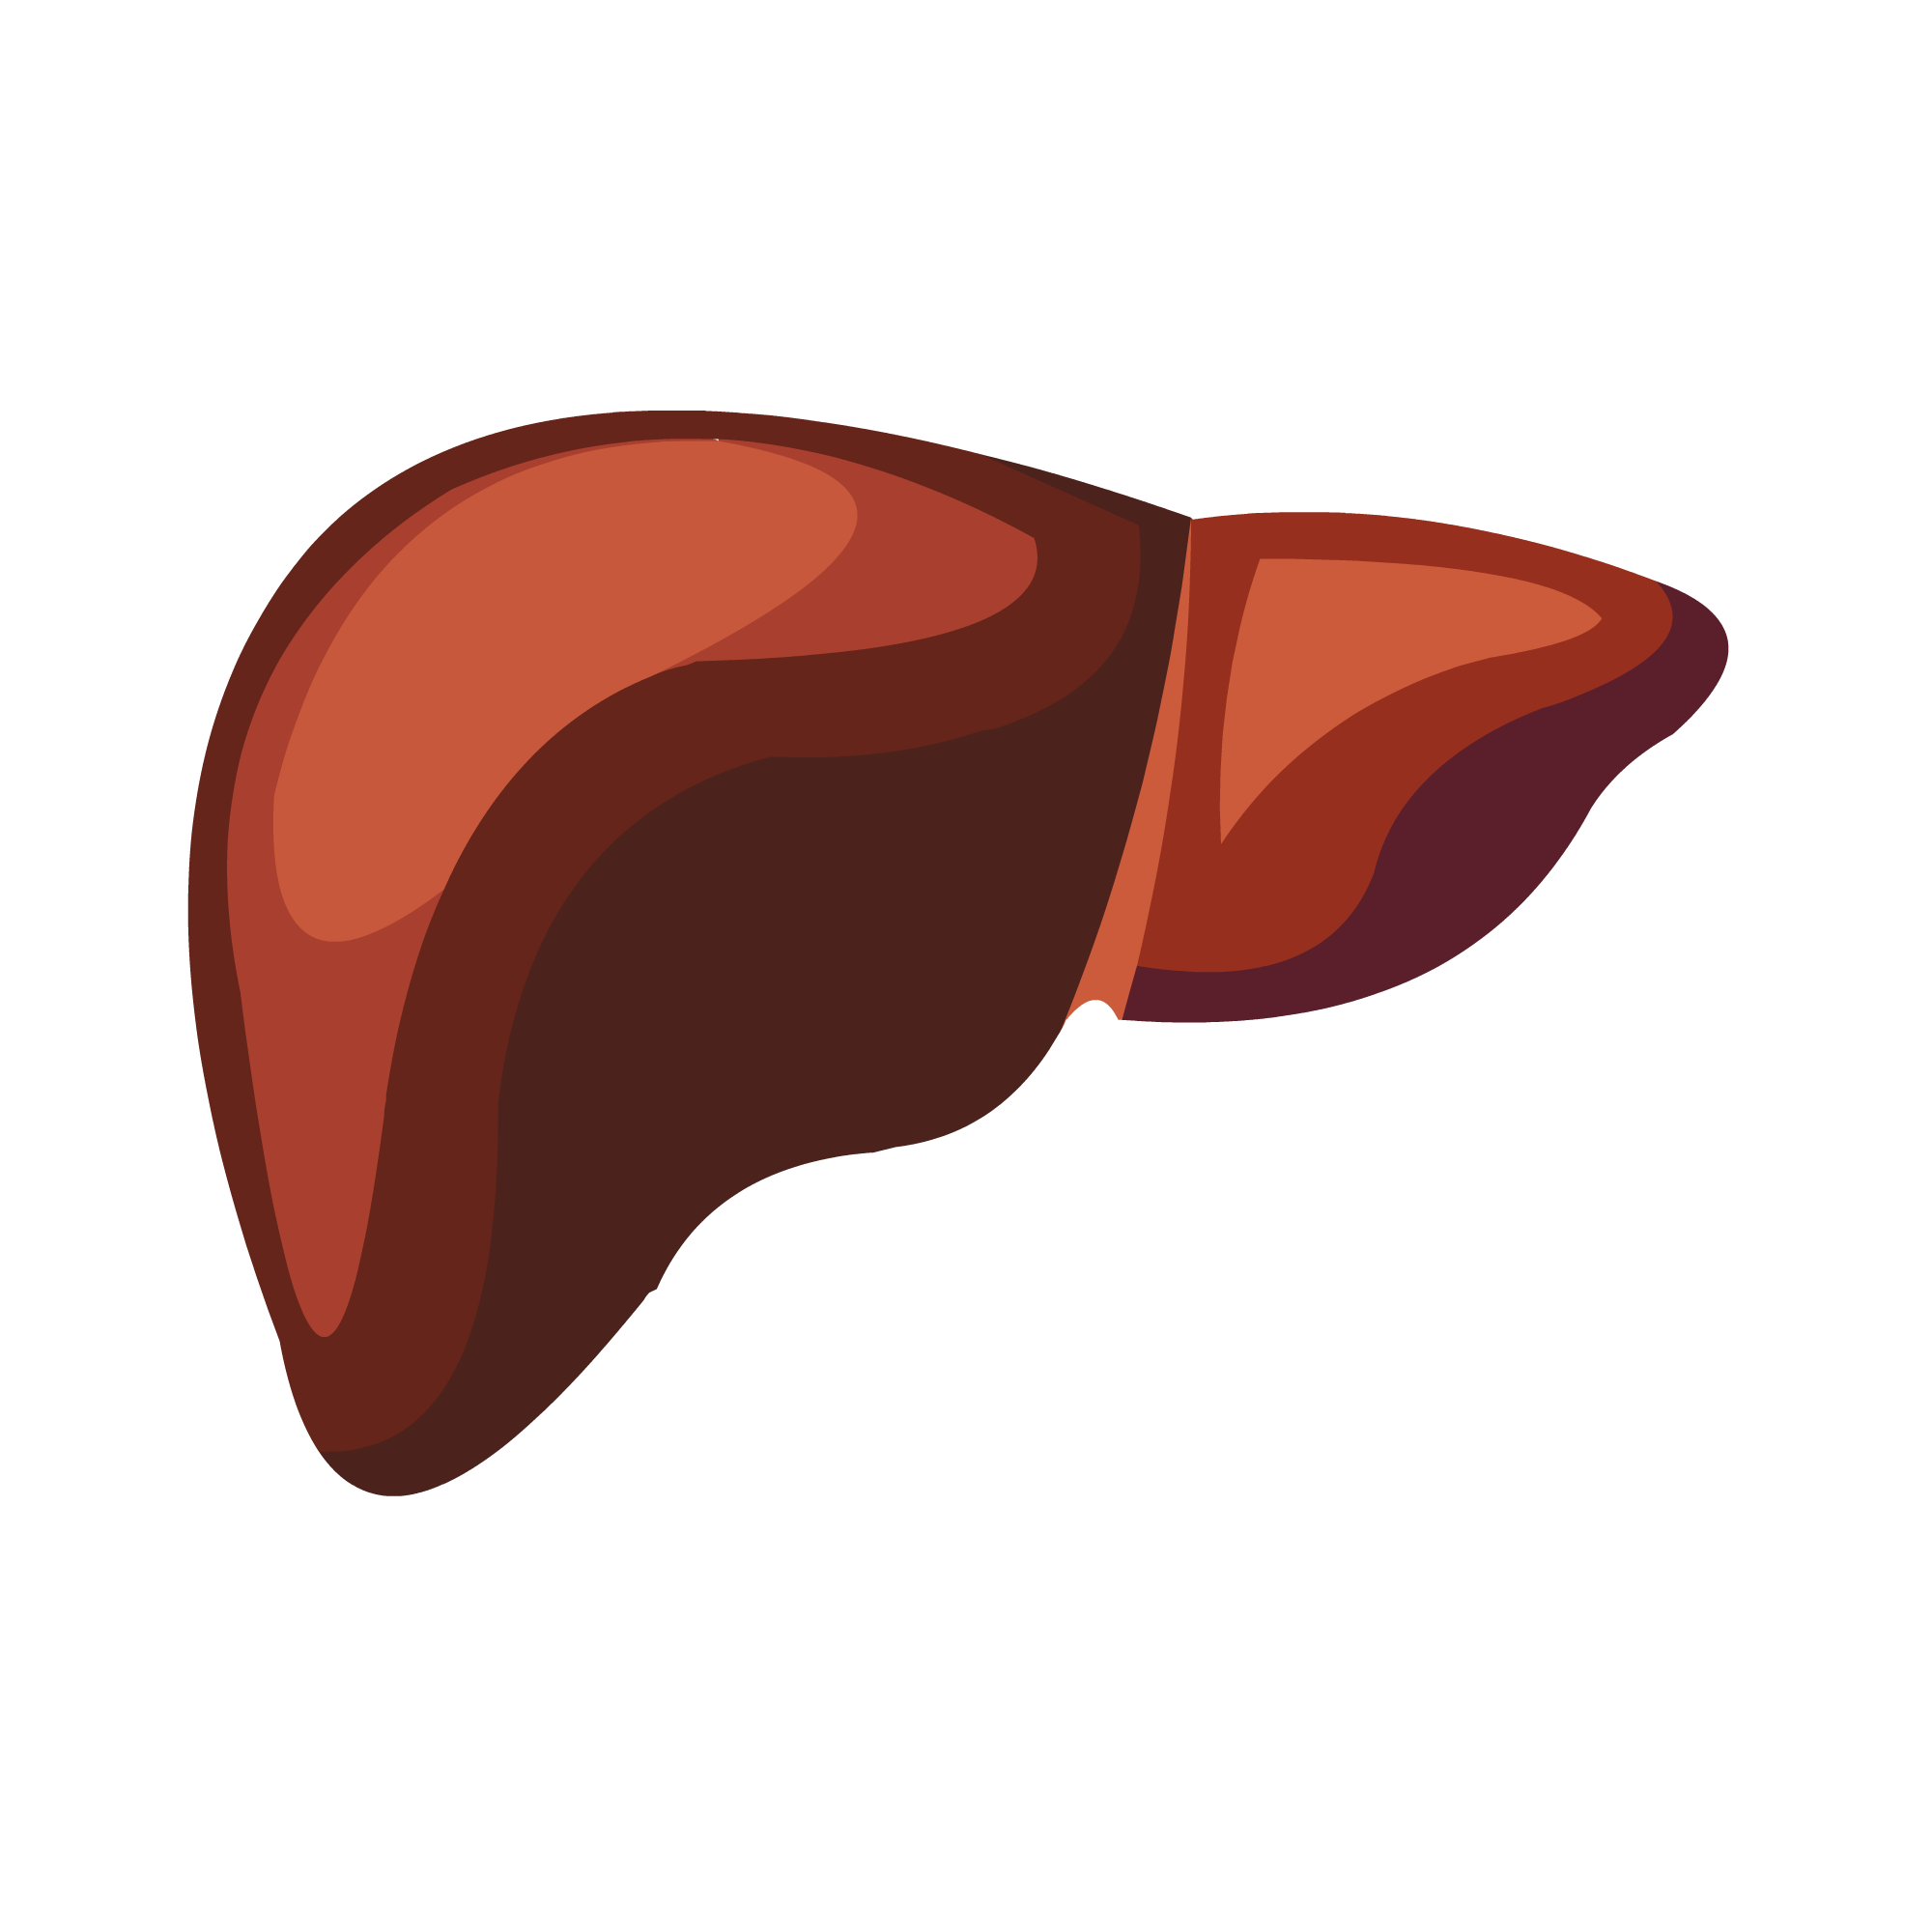 Pngtreehand drawn human organ liver 4726000